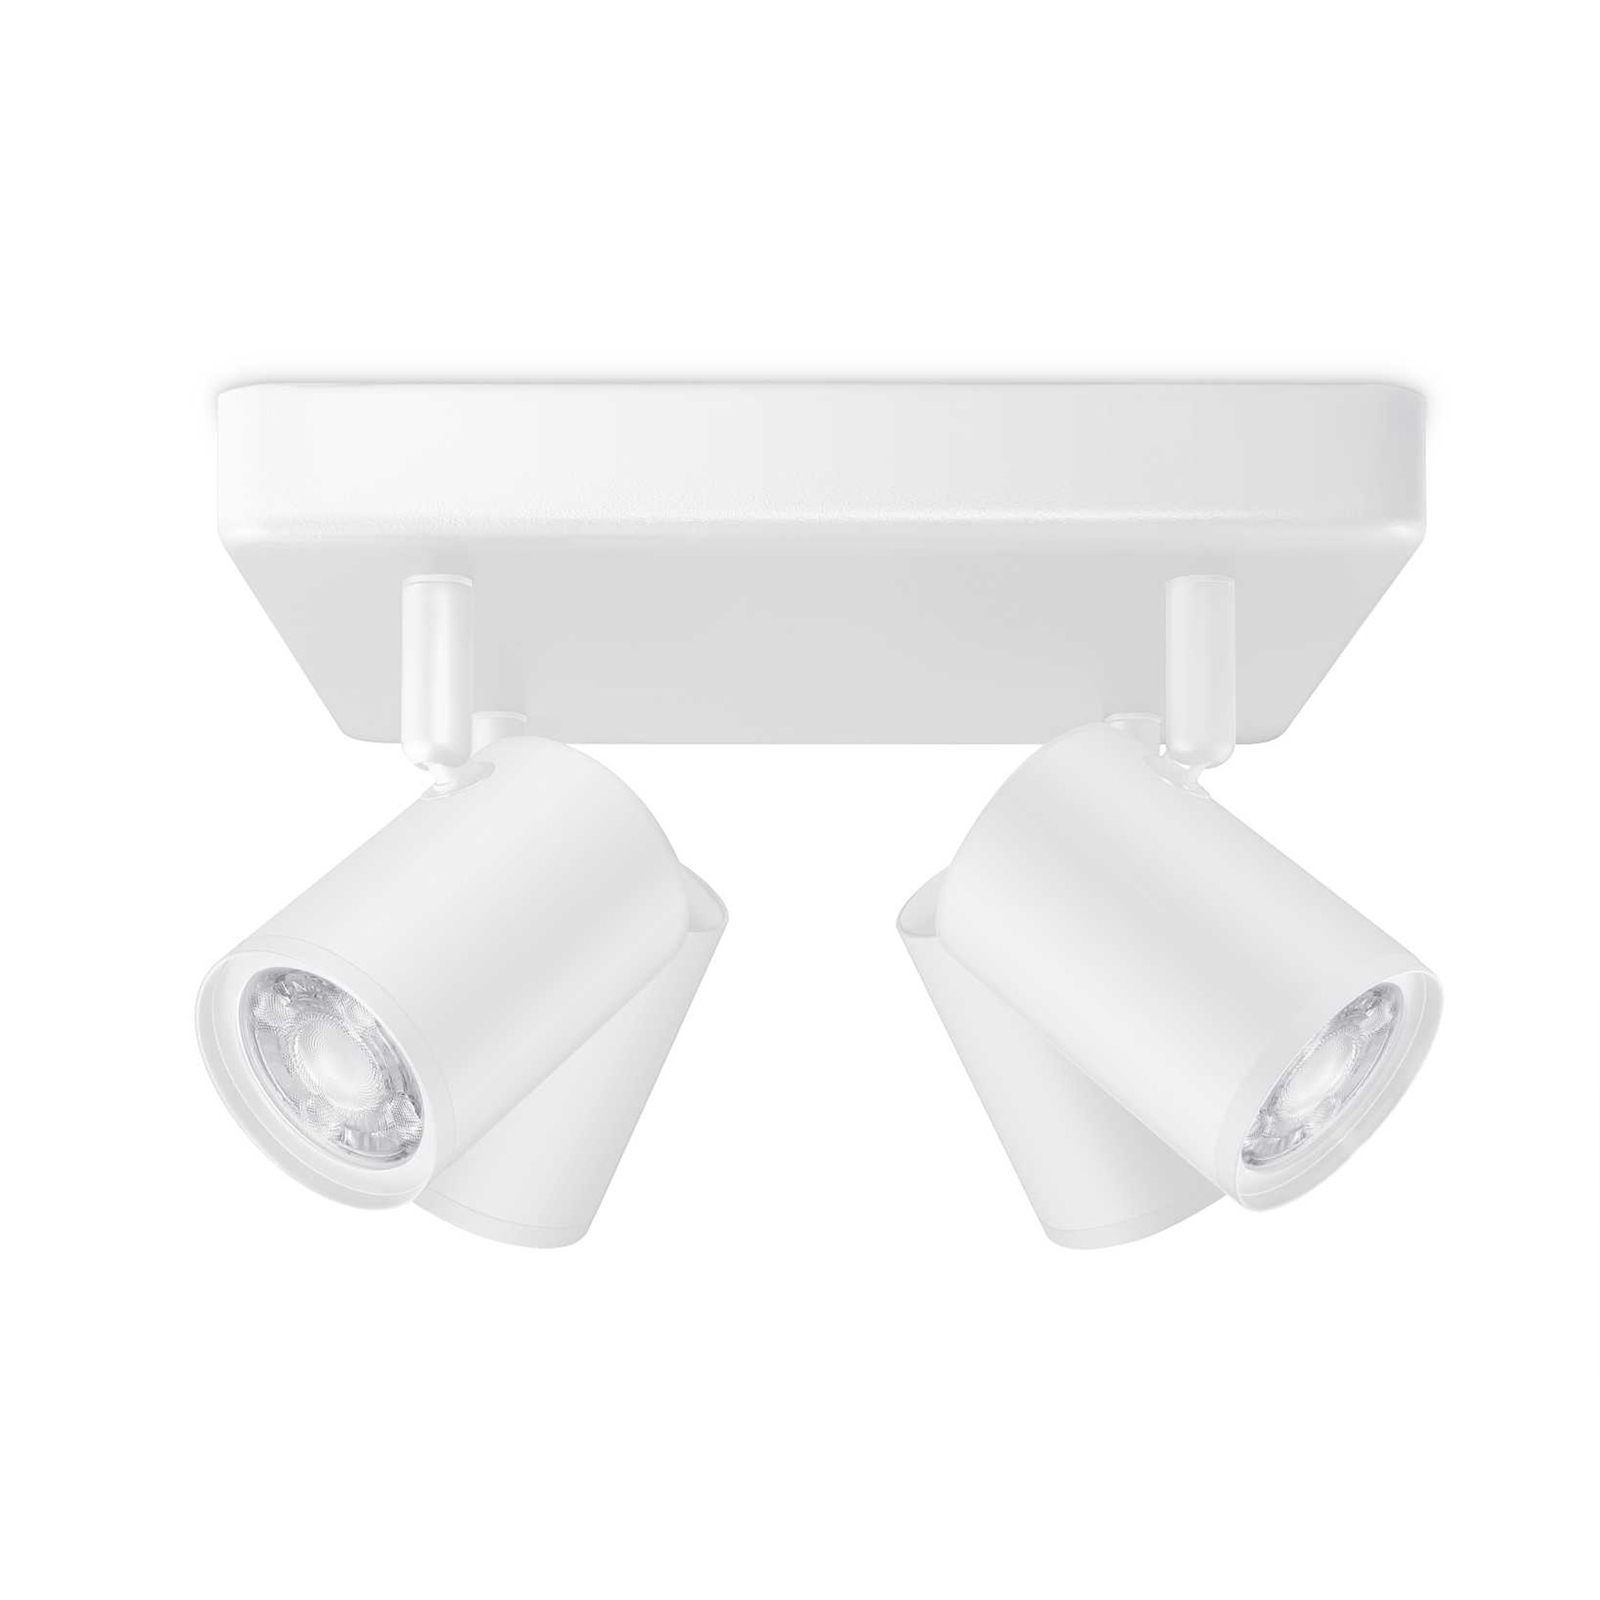 WiZ LED downlight Imageo, 4 luces cuadrado blanco